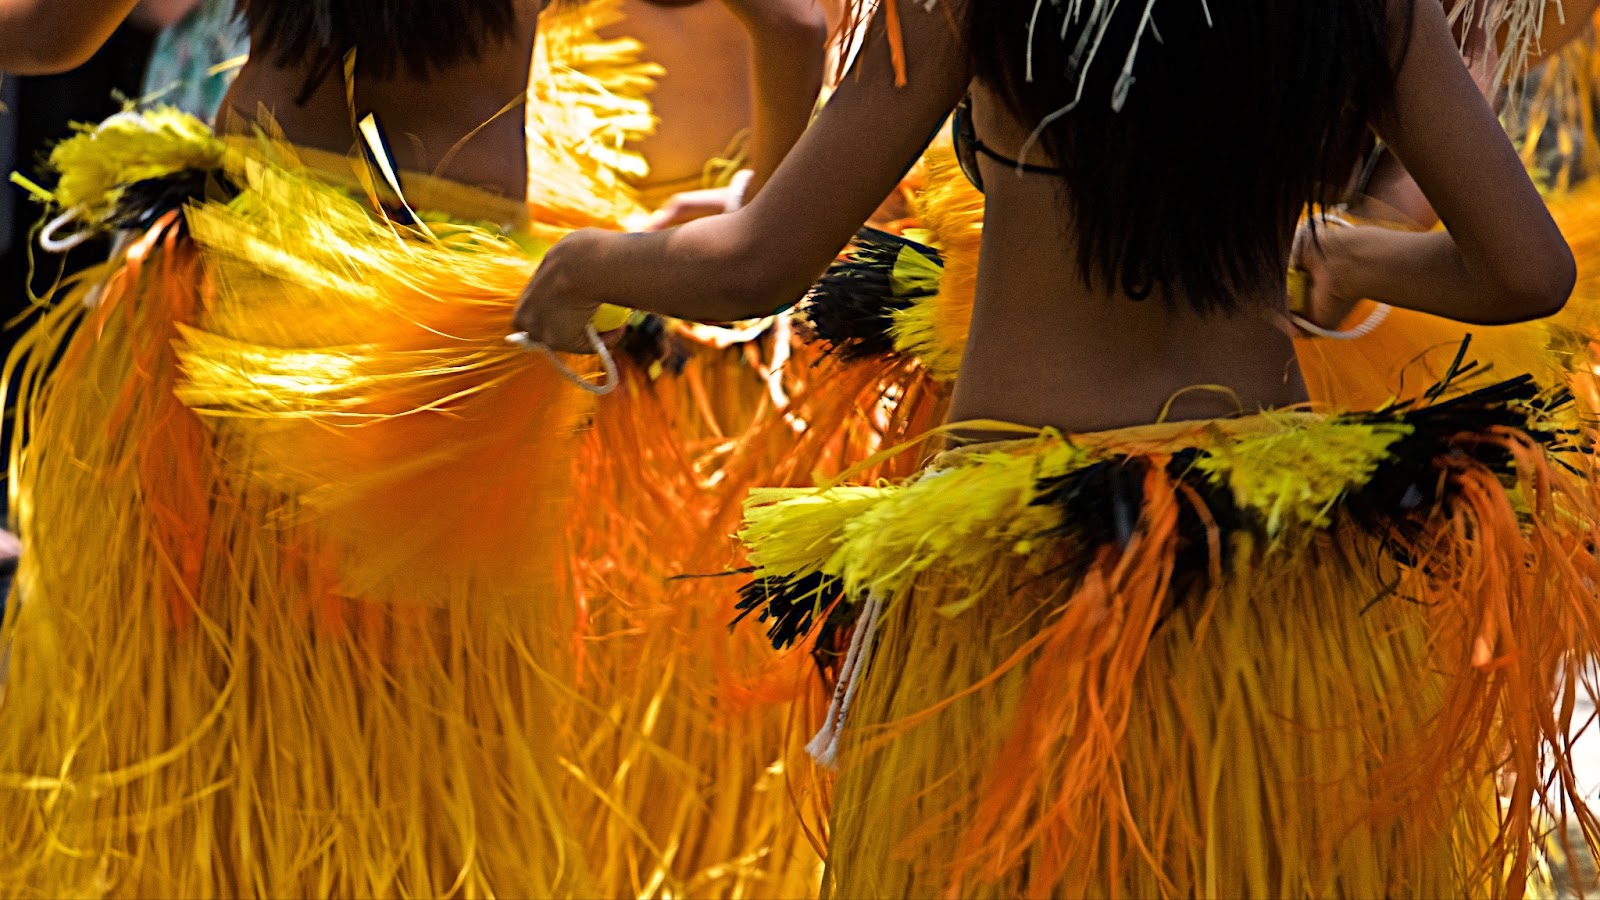  Colorful Hawaiian luau with traditional dancers and live music.